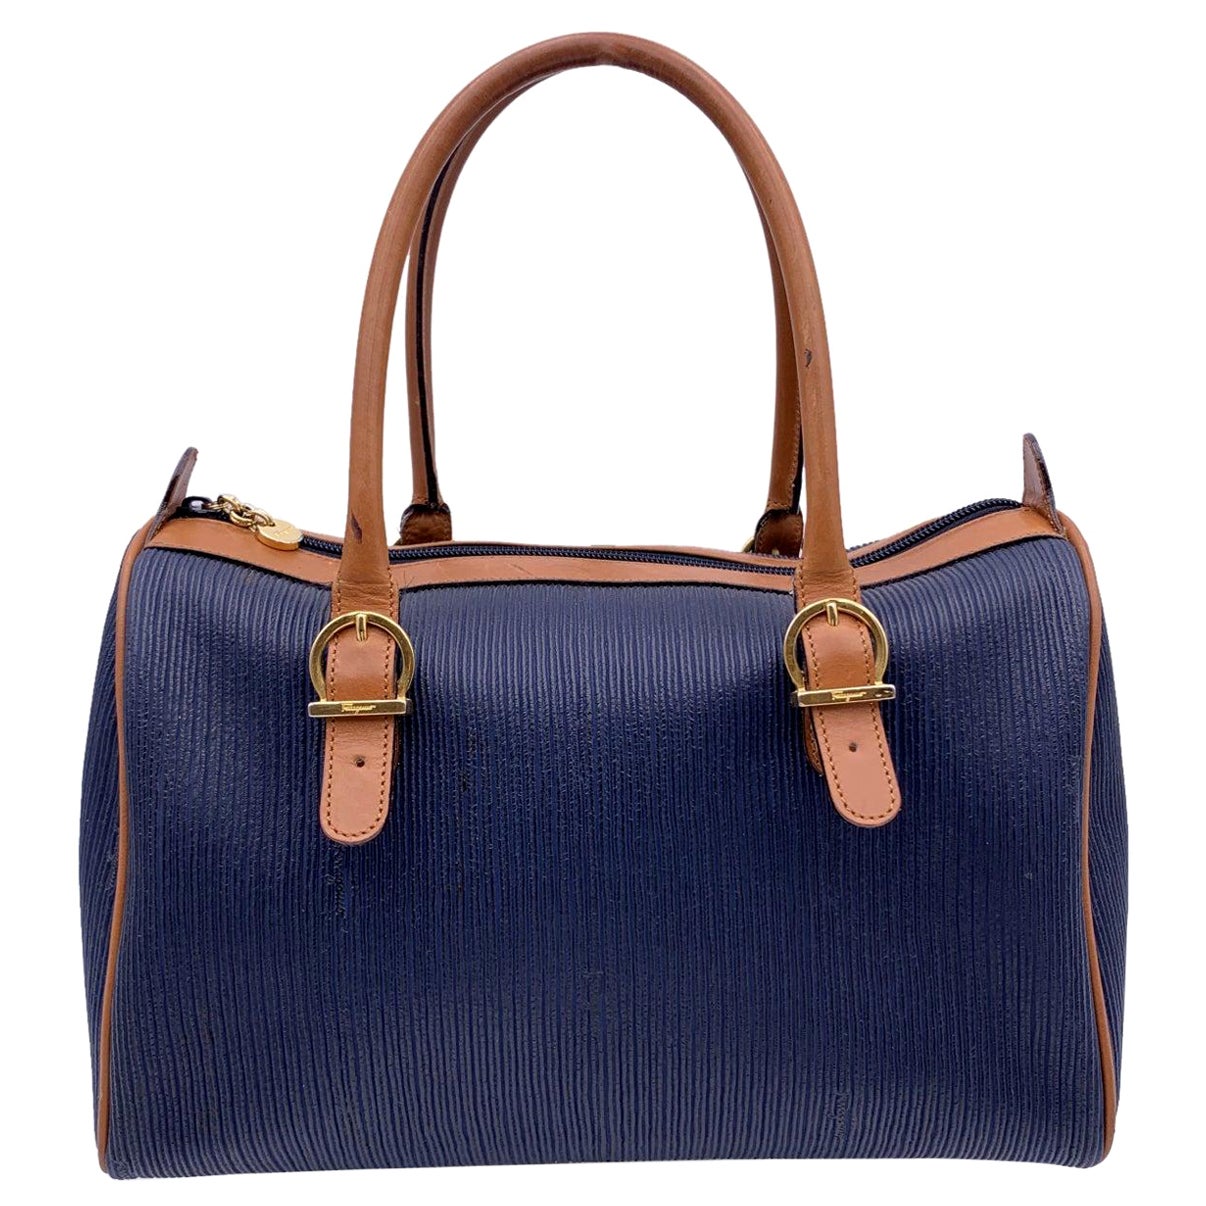 Vintage Salvatore Ferragamo Handbags and Purses - 210 For Sale at 